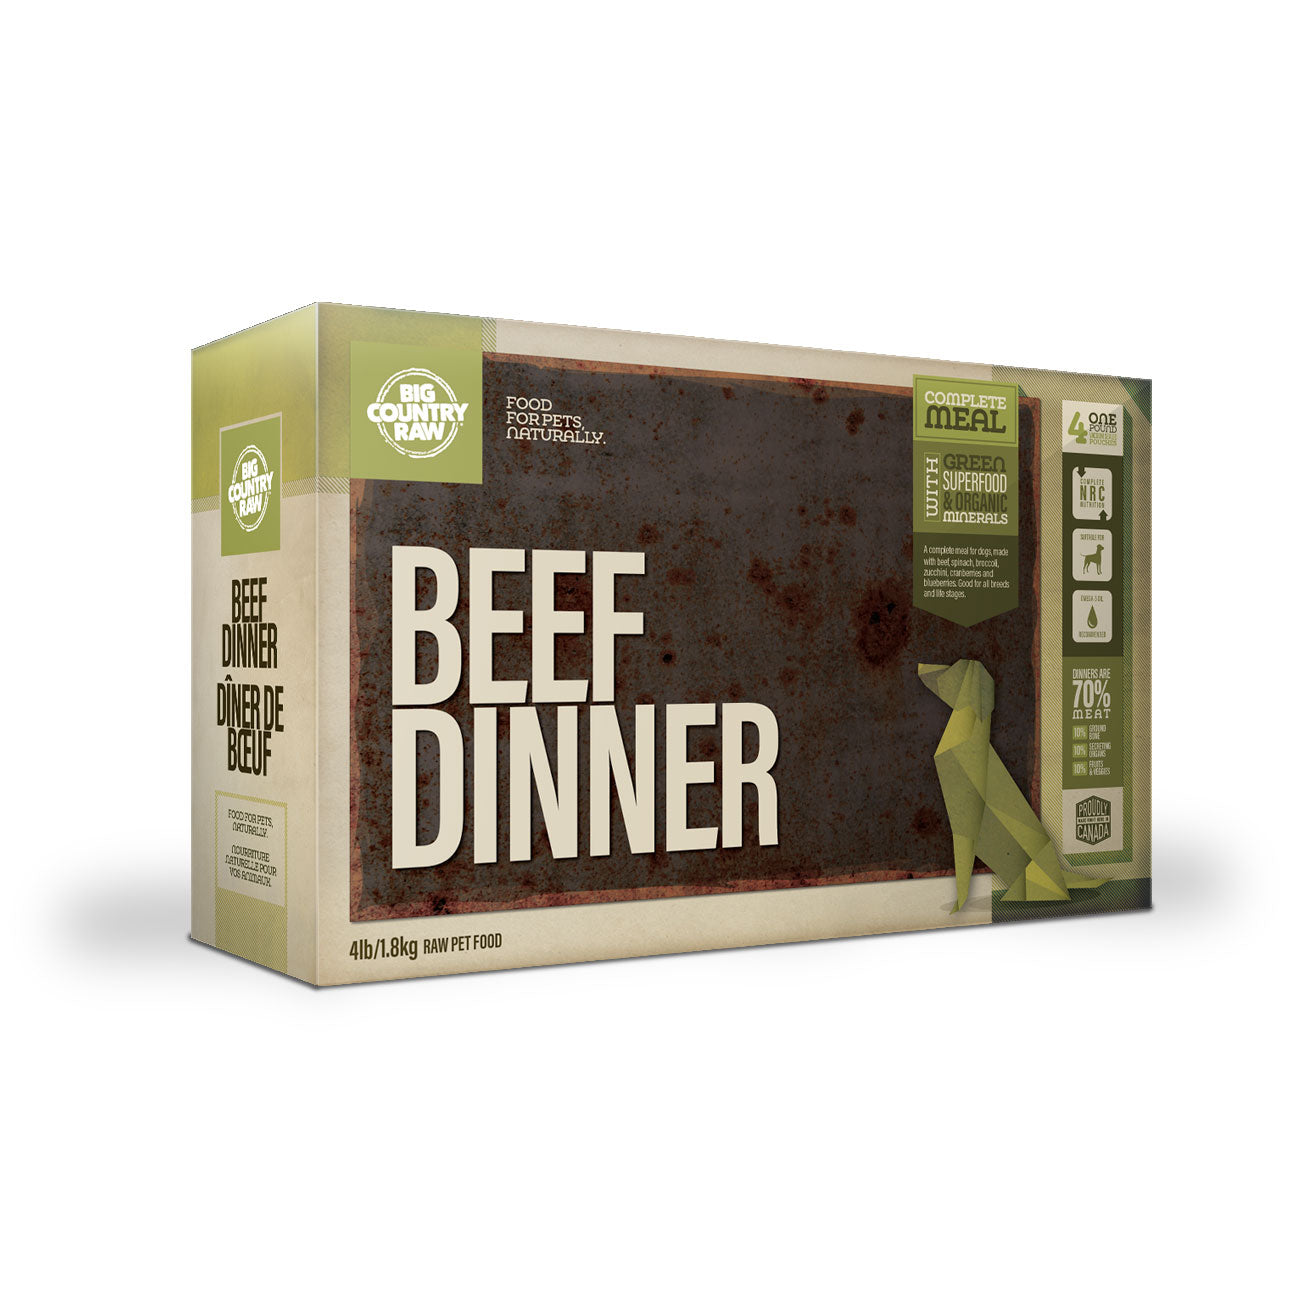 BIG COUNTRY RAW DINNER CARTON - BEEF